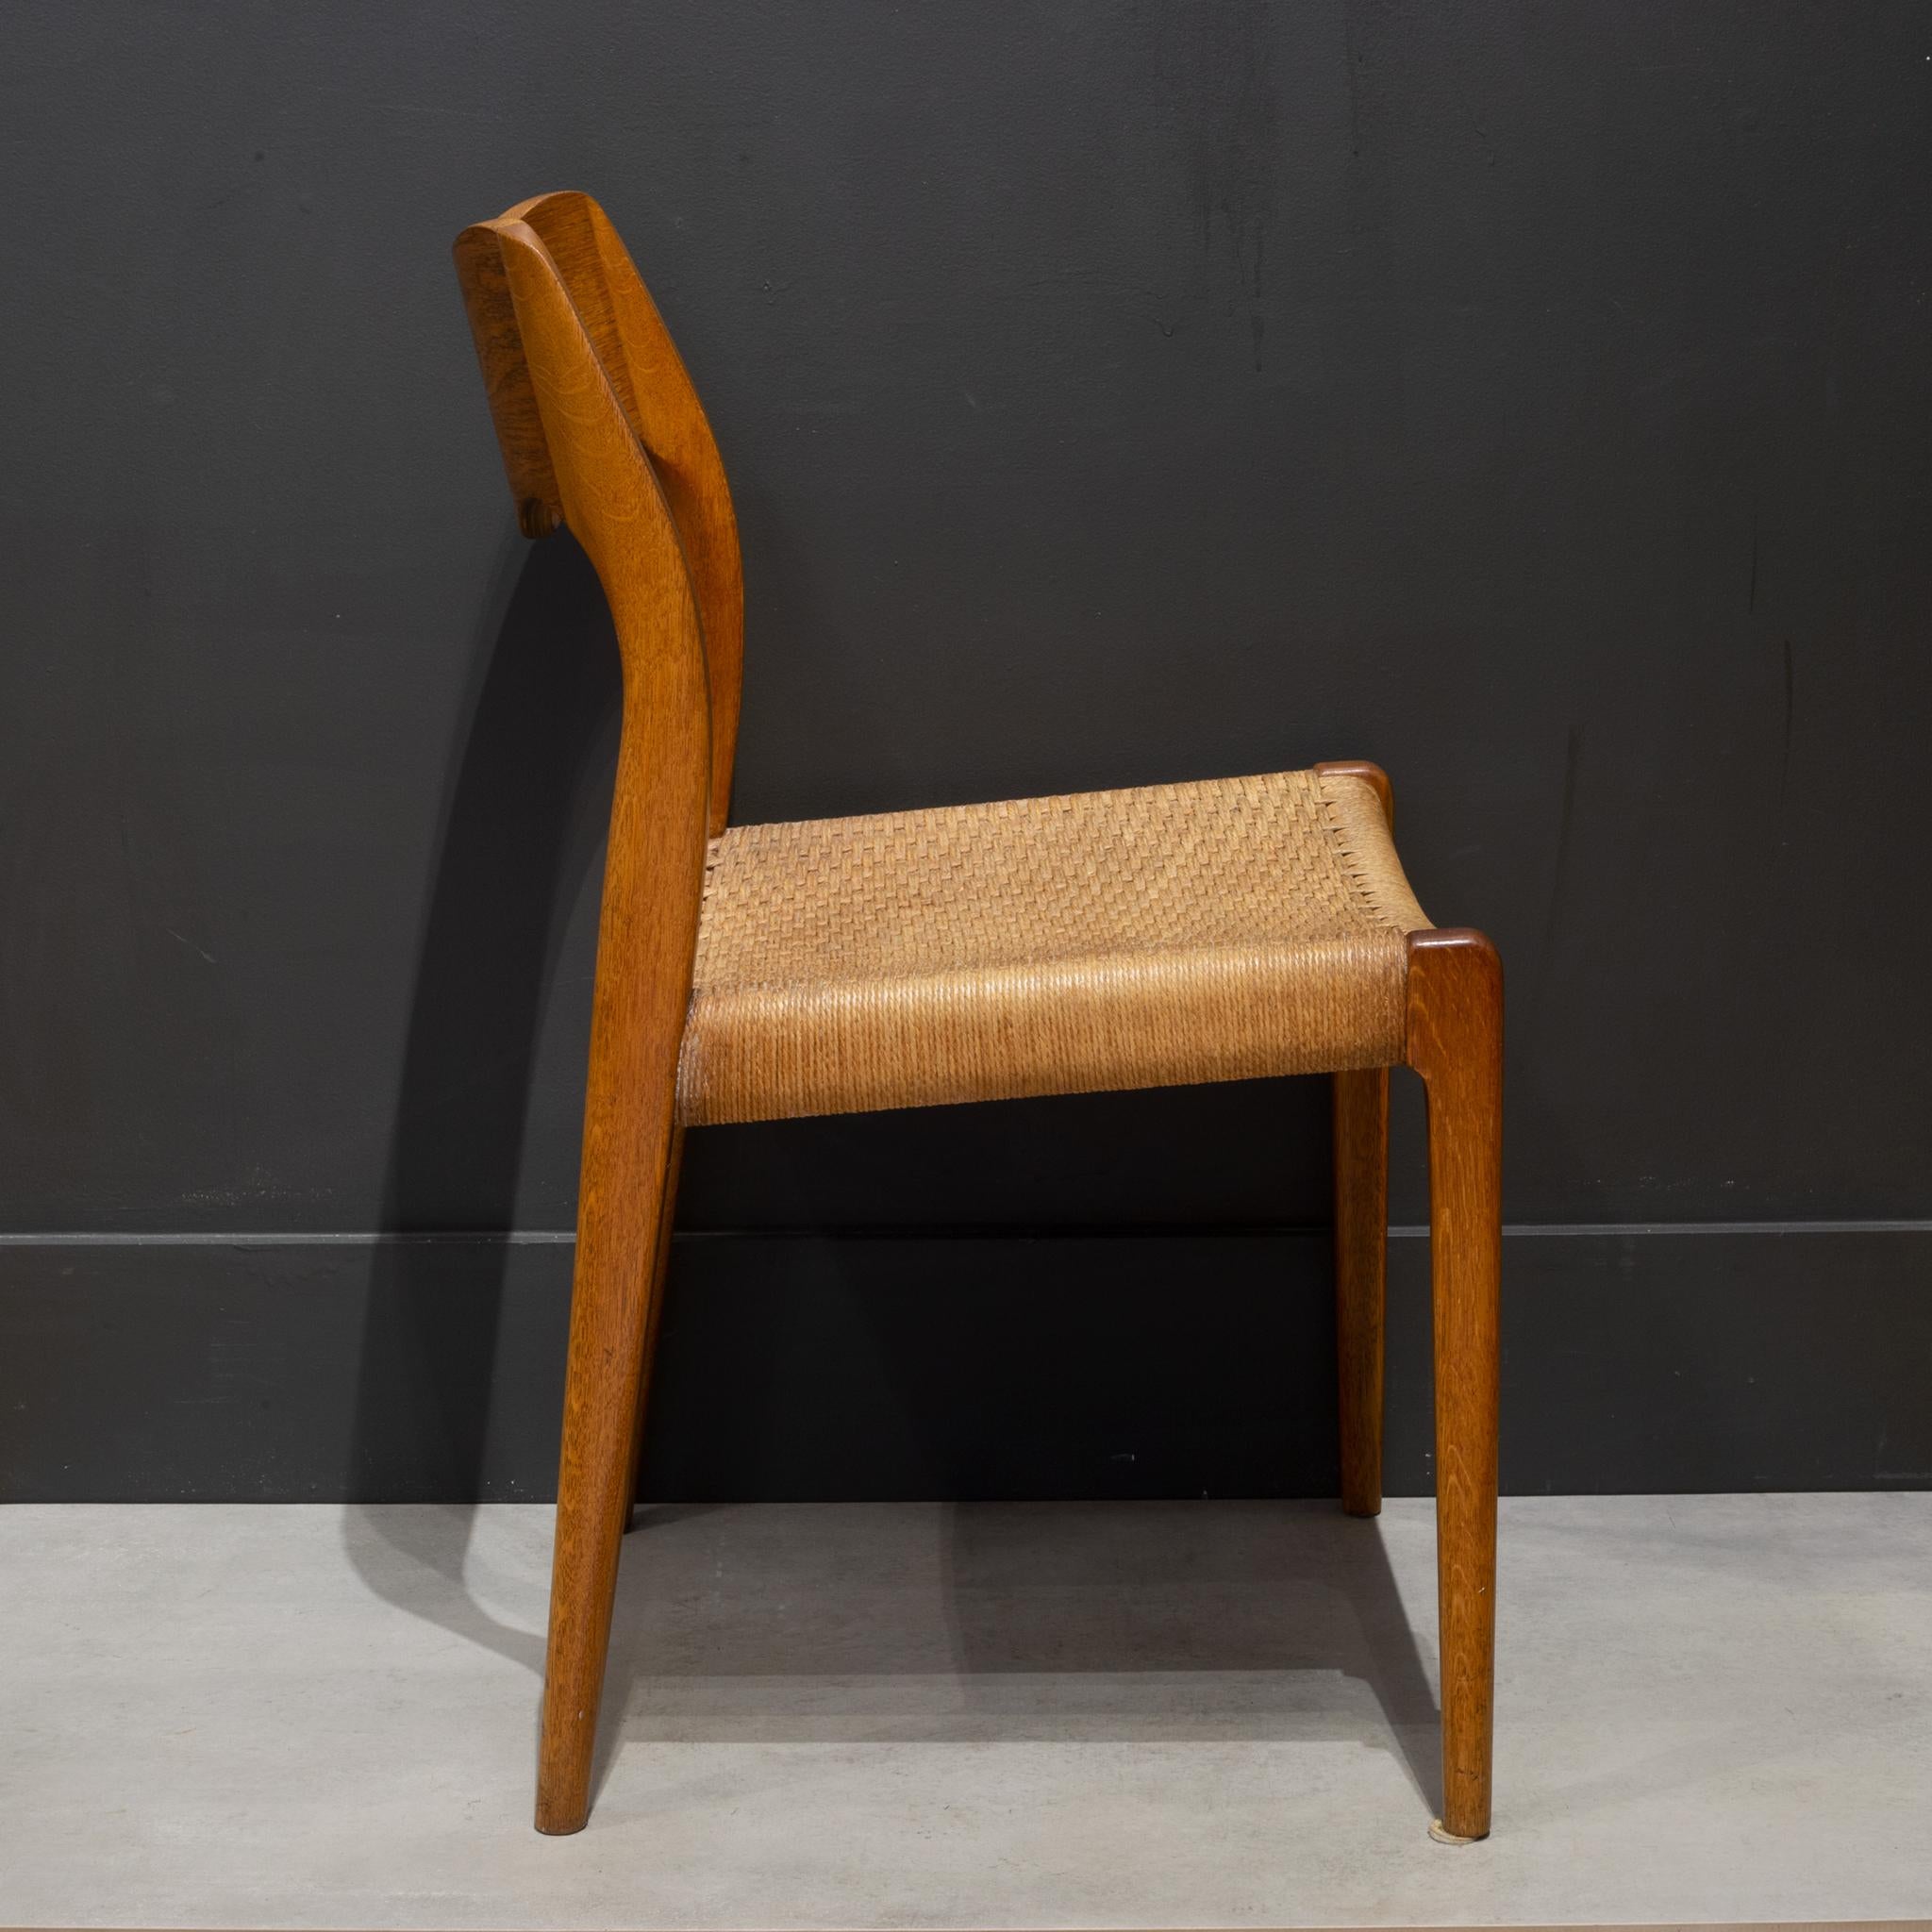 20th Century Mid-Century Arne Hovmand-Olsen Teak and Paper Cord Dining Chairs c.1960